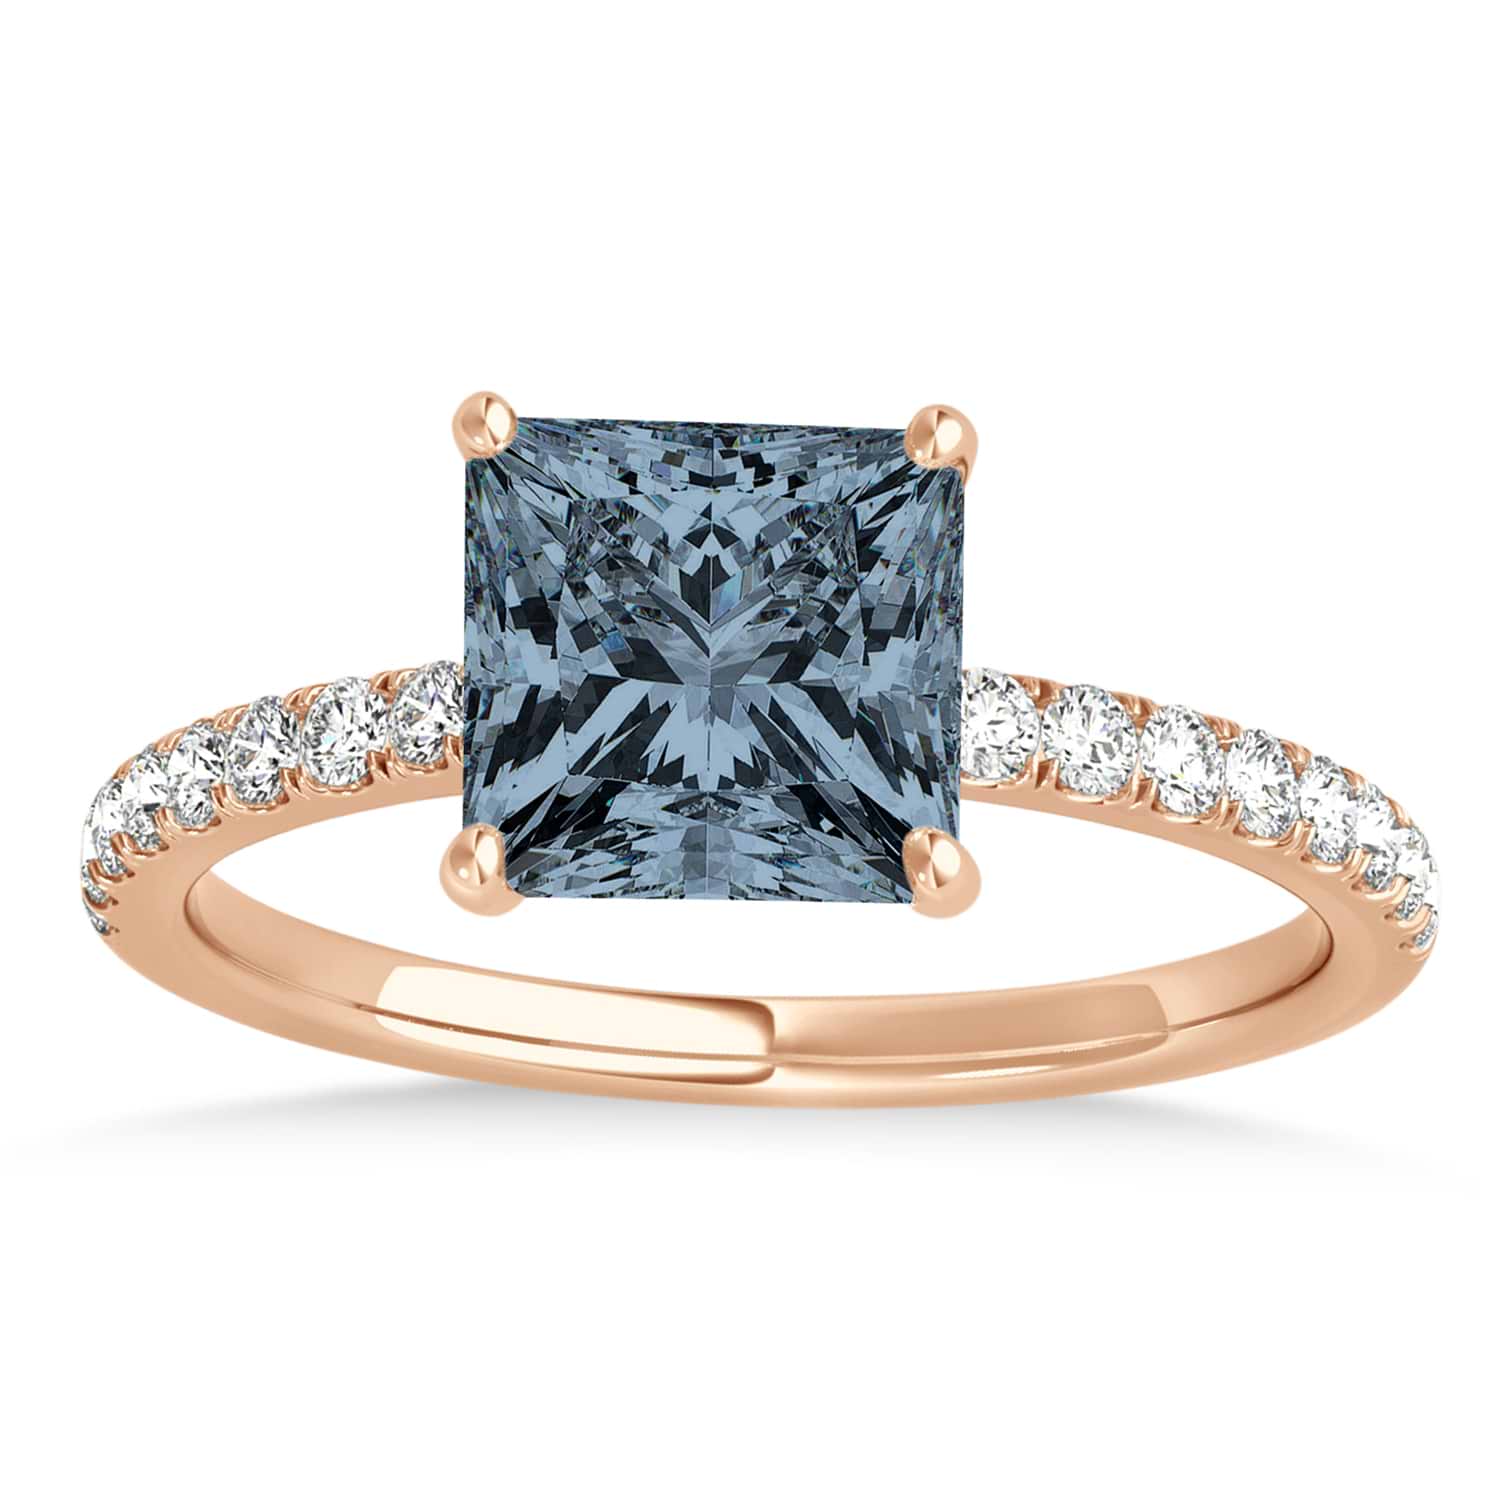 Princess Gray Spinel & Diamond Single Row Hidden Halo Engagement Ring 14k Rose Gold (0.81ct)